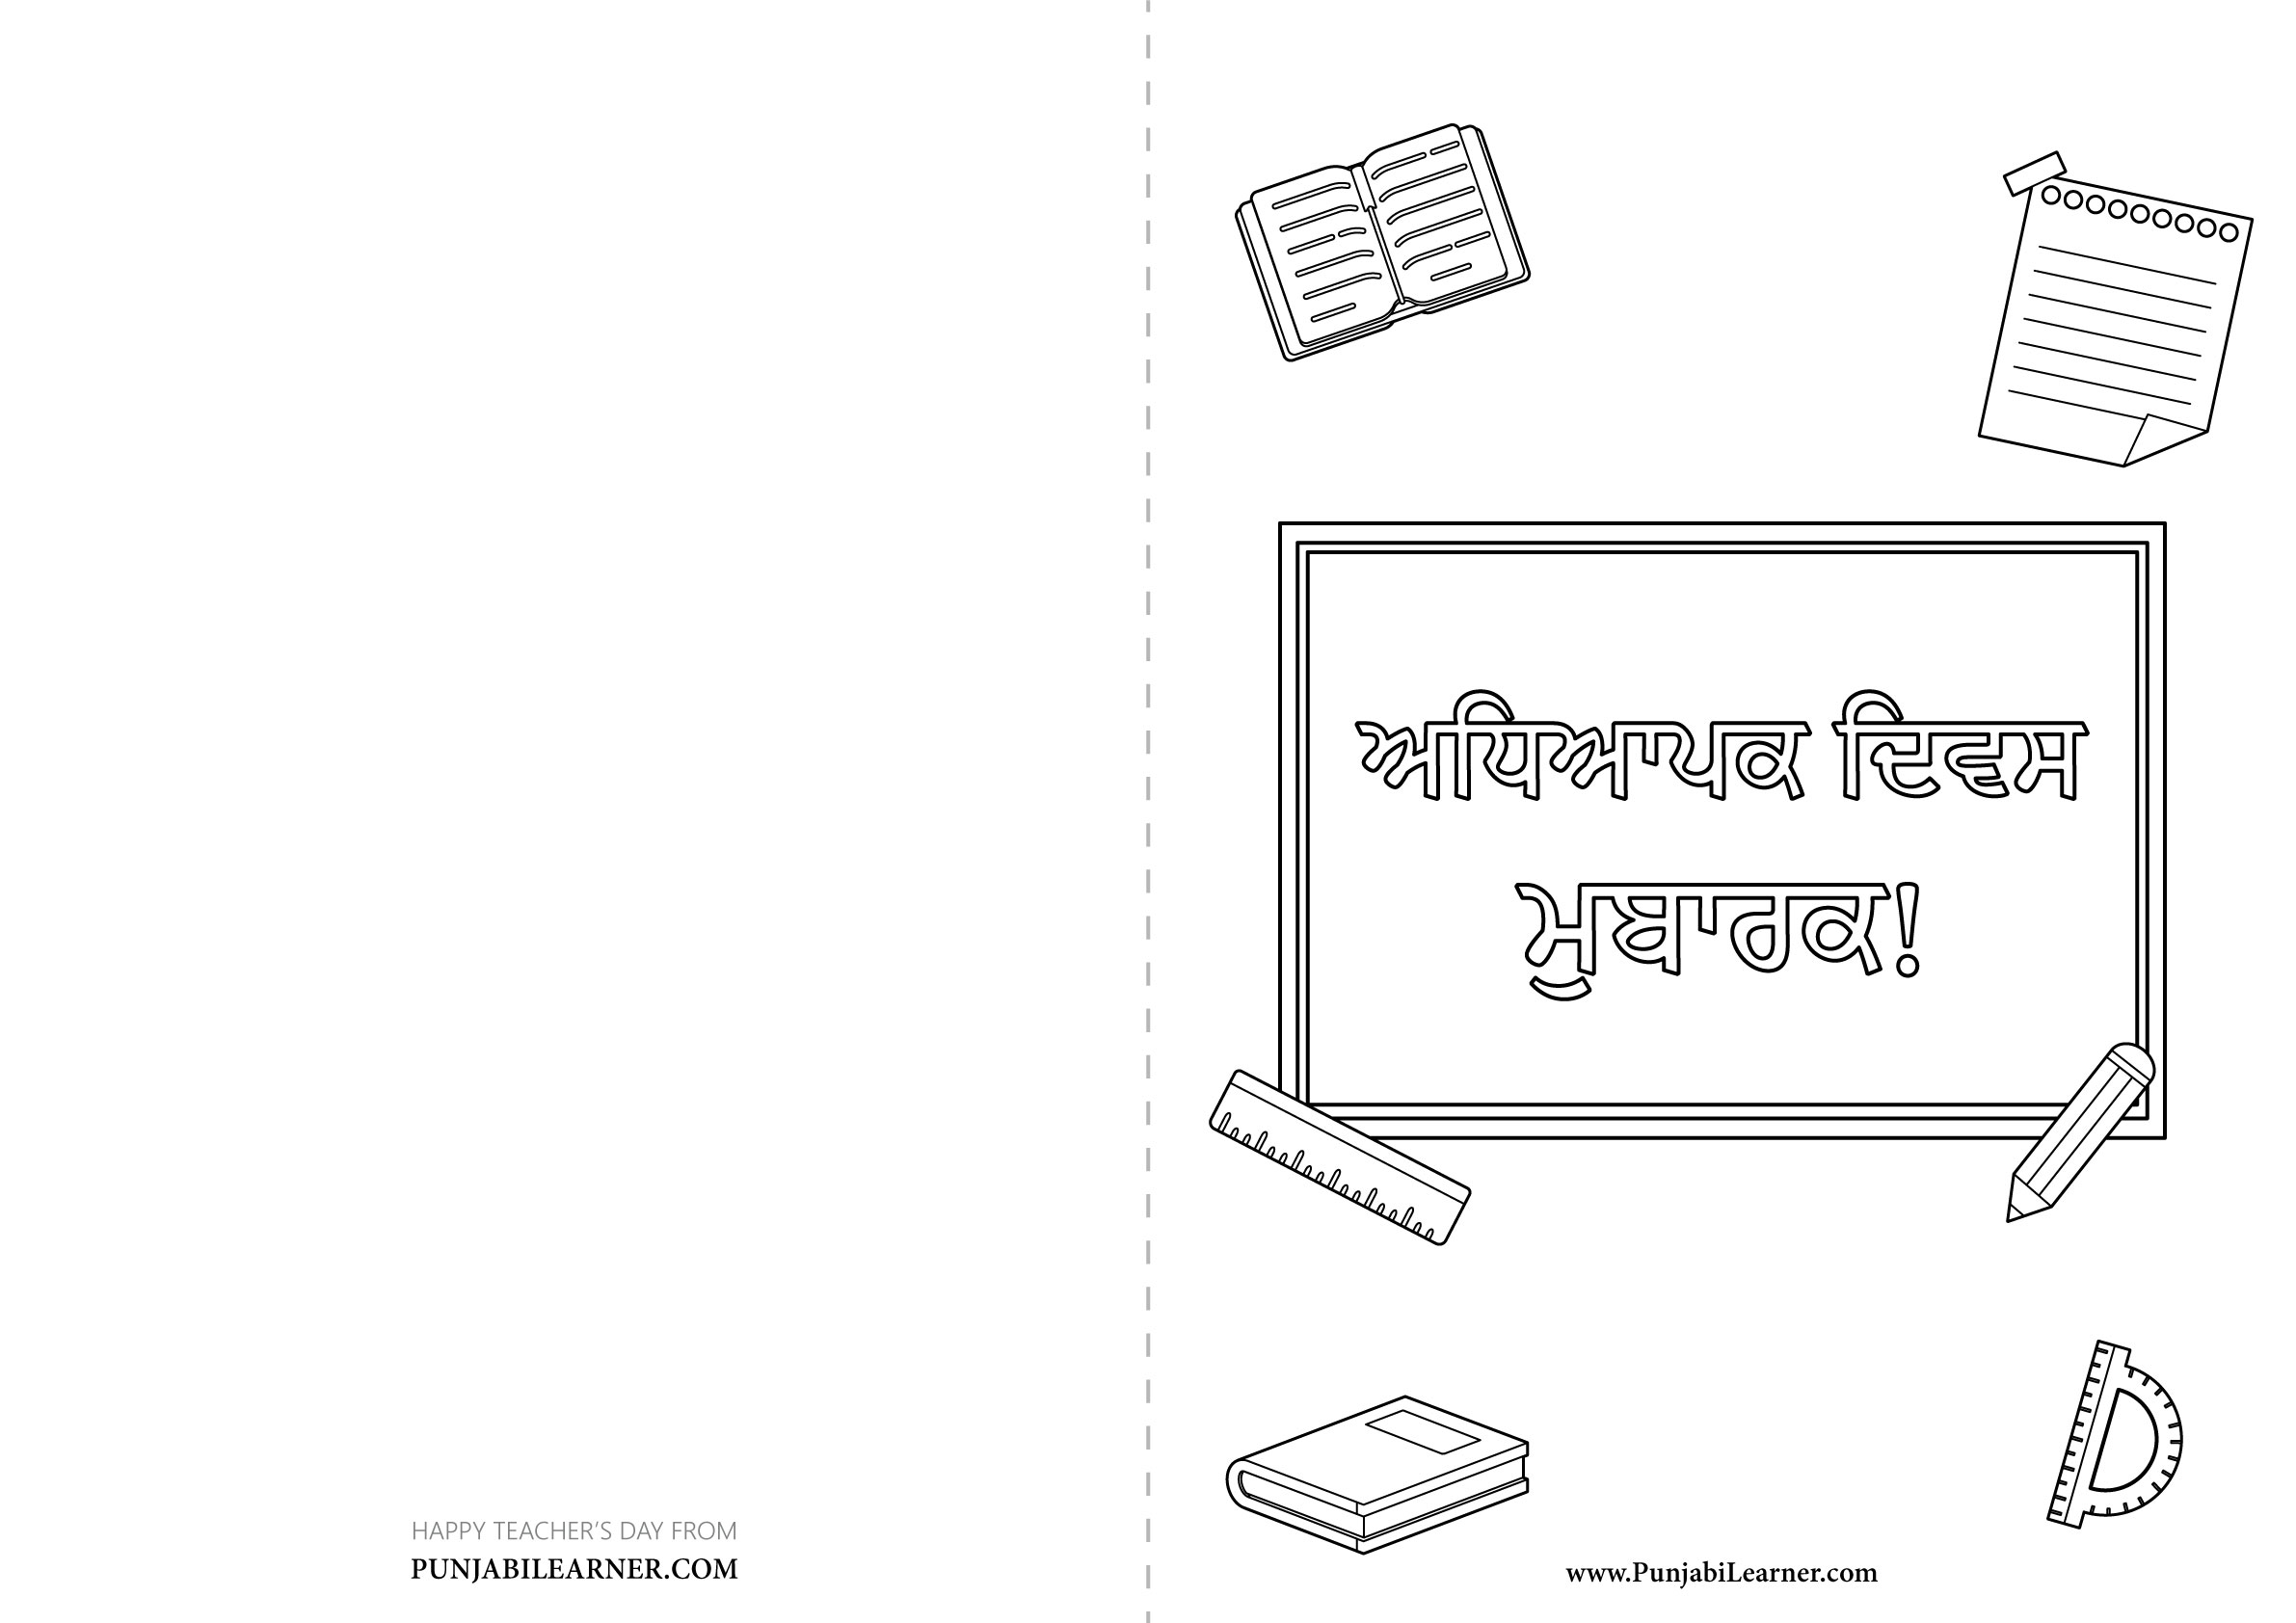 Punjabi Teacher's Day Card Colouring in PDF